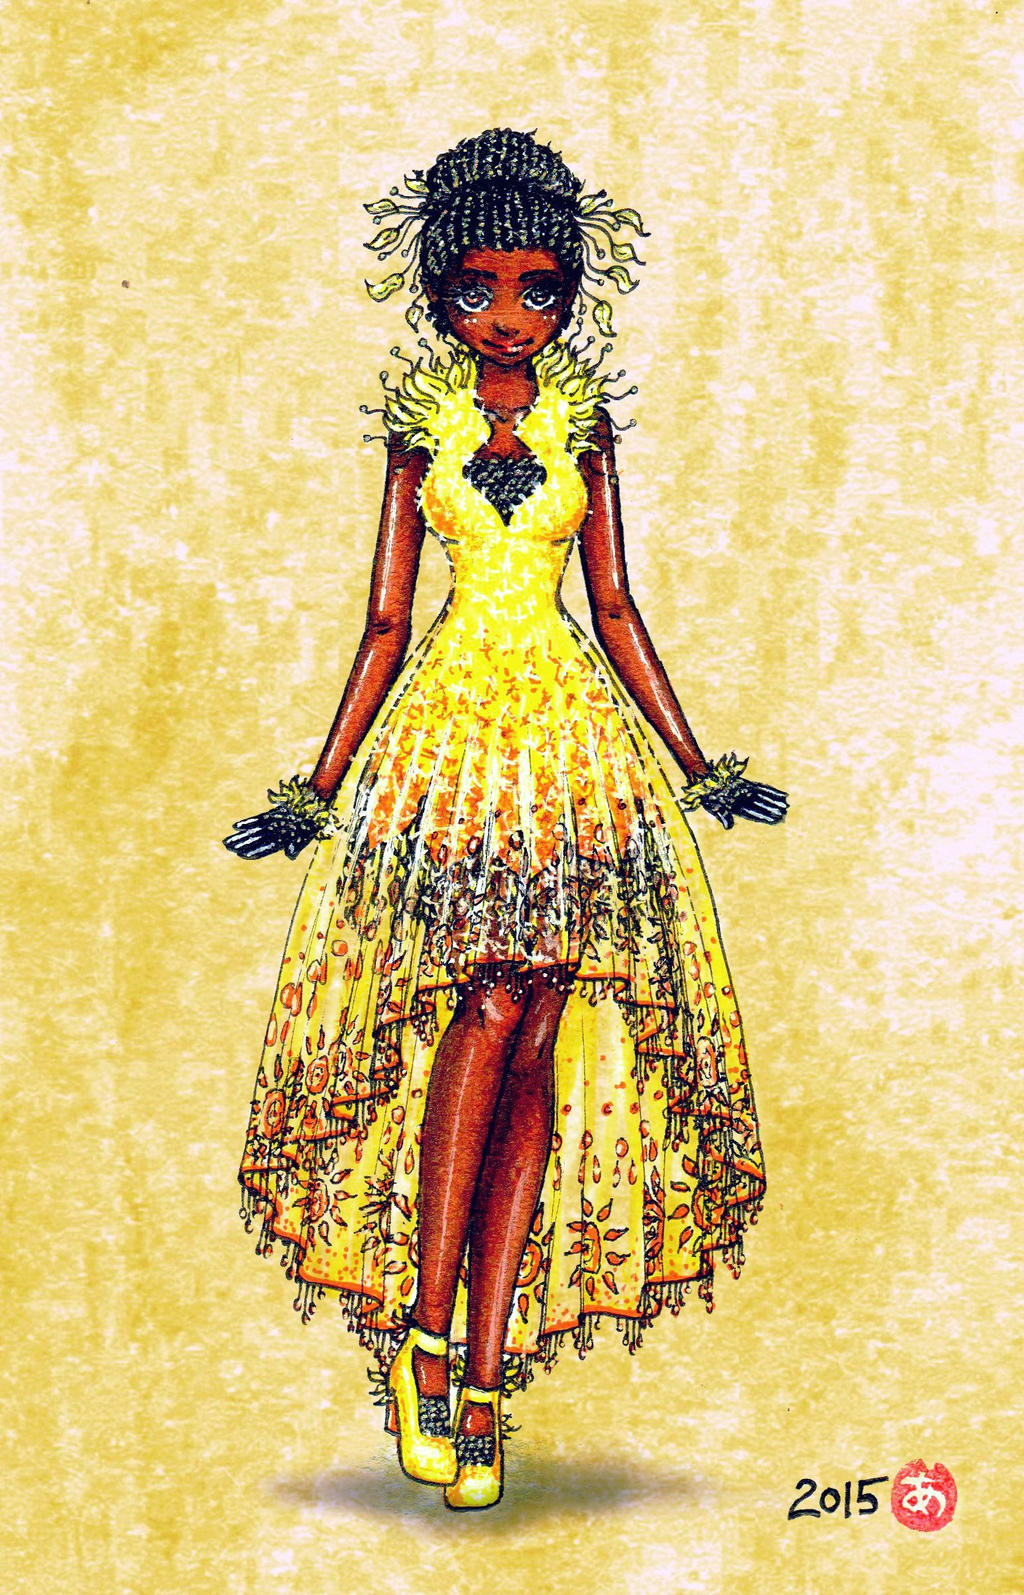 Wedding-Dress - Tiana by autumnrose83 on DeviantArt  Disney inspired  outfits, Dress design sketches, Dress